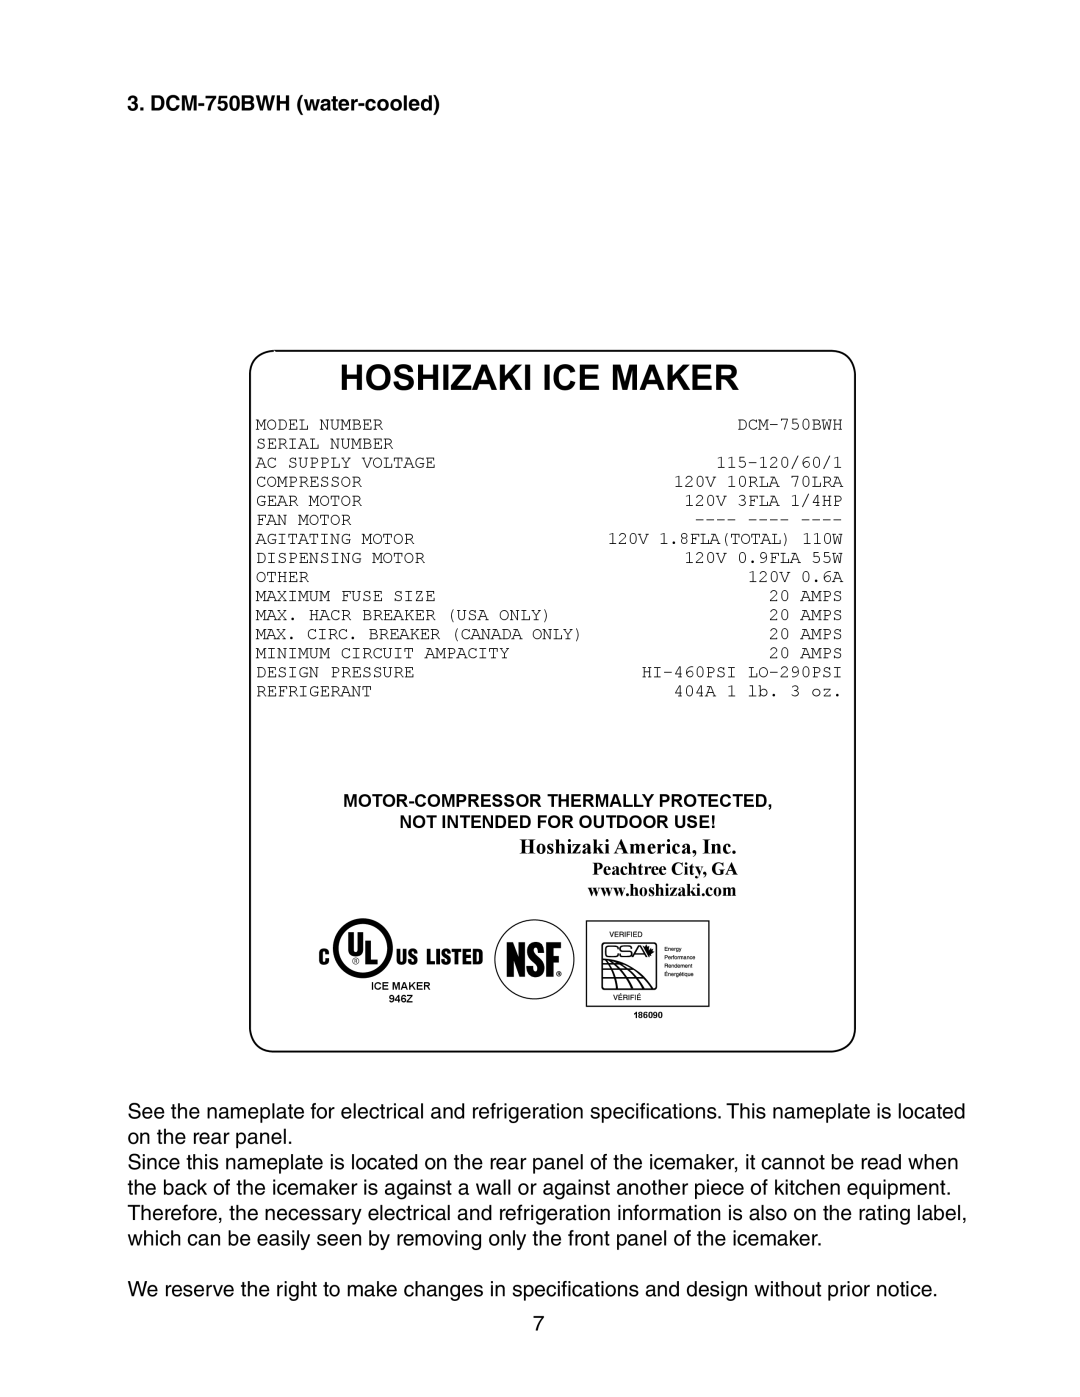 Hoshizaki DCM-750BAH(-OS), DCM-750BWH(-OS) Hoshizaki Ice Maker, DCM-750BWH water-cooled, Hoshizaki America, Inc 